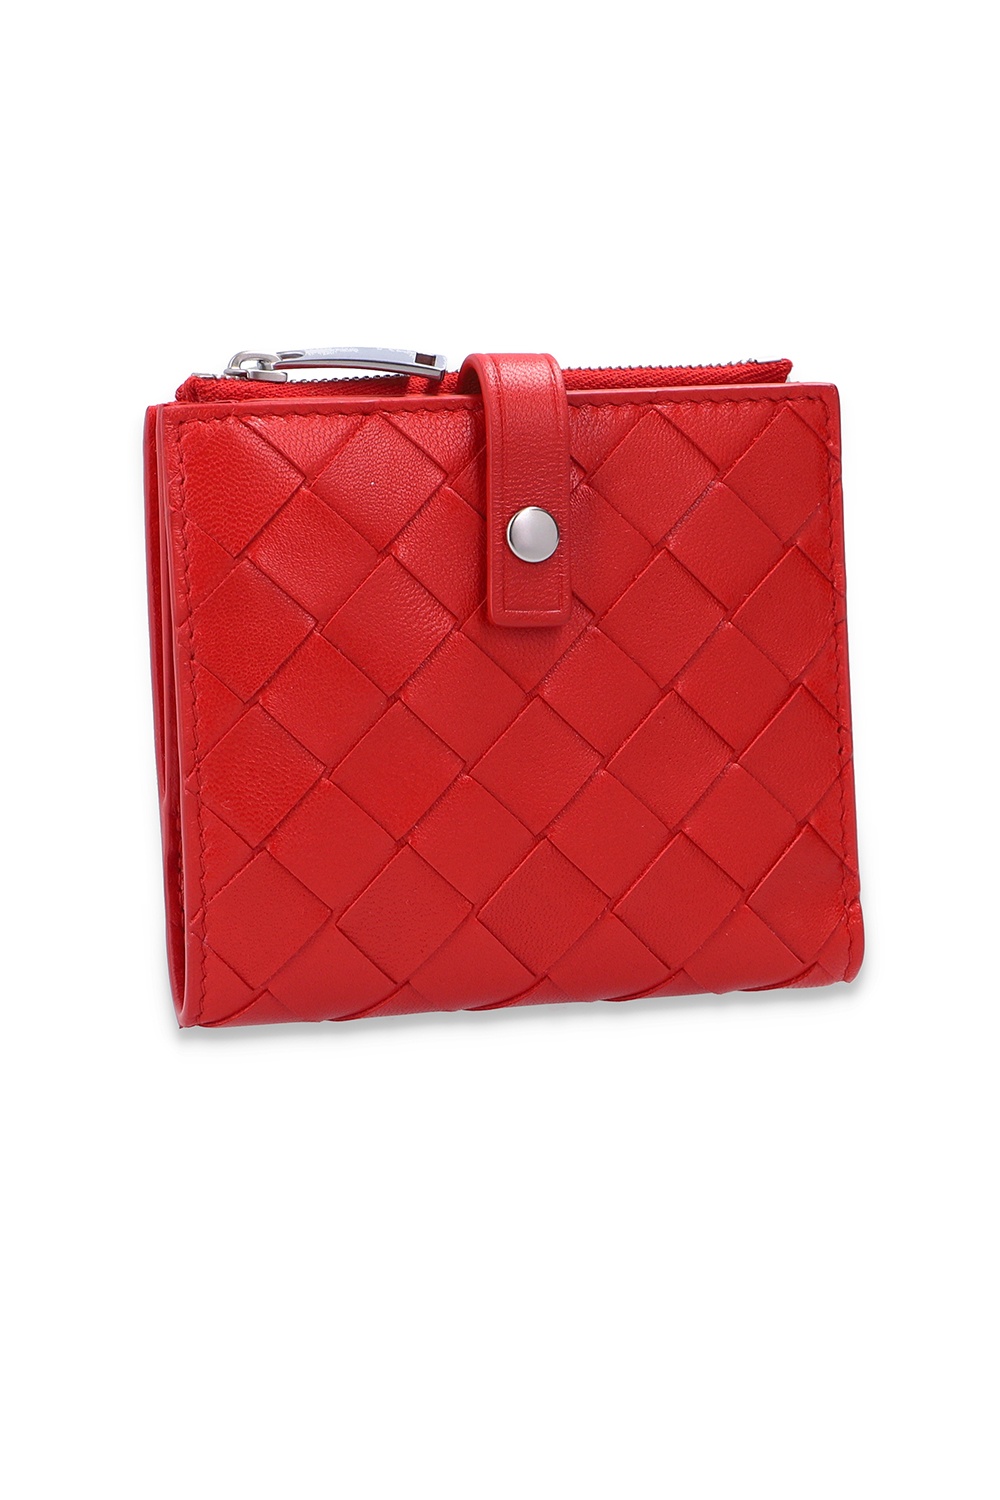 Bottega Veneta ‘Intrecciato’ leather wallet